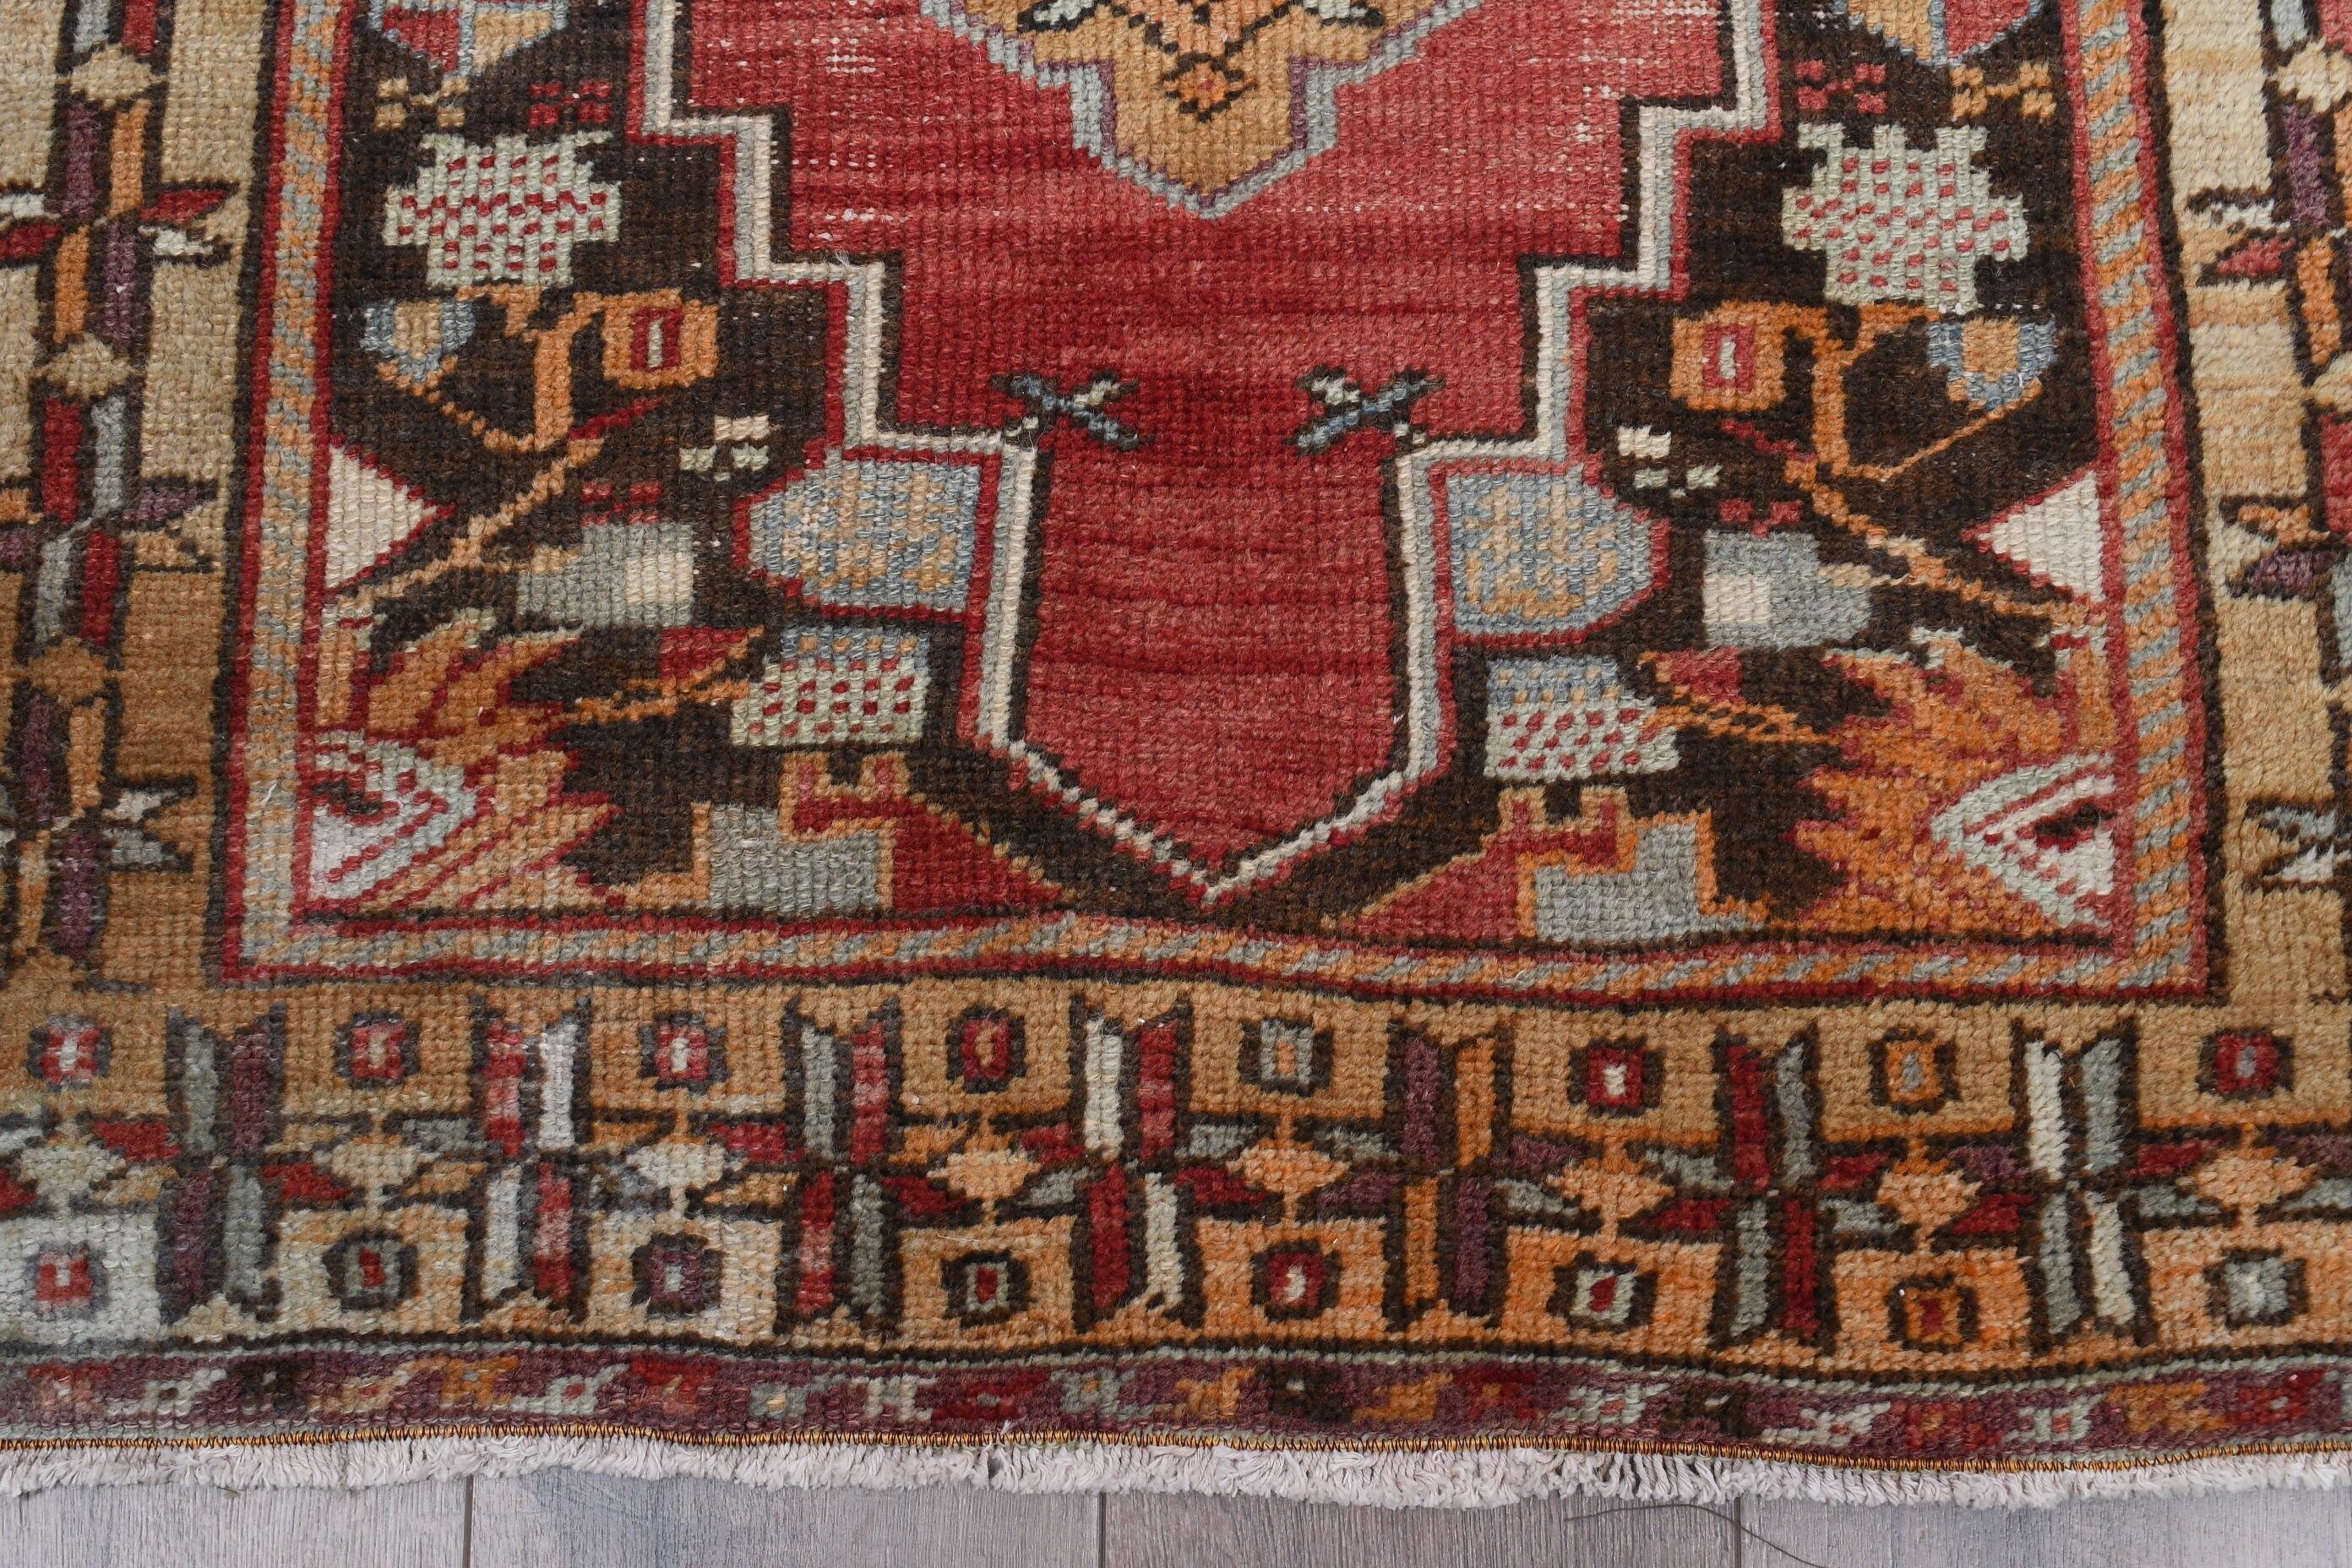 Oriental Rug, Vintage Rugs, Door Mat Rug, Pale Rug, Turkish Rugs, Red Home Decor Rug, Wall Hanging Rug, 2.9x4.7 ft Small Rug